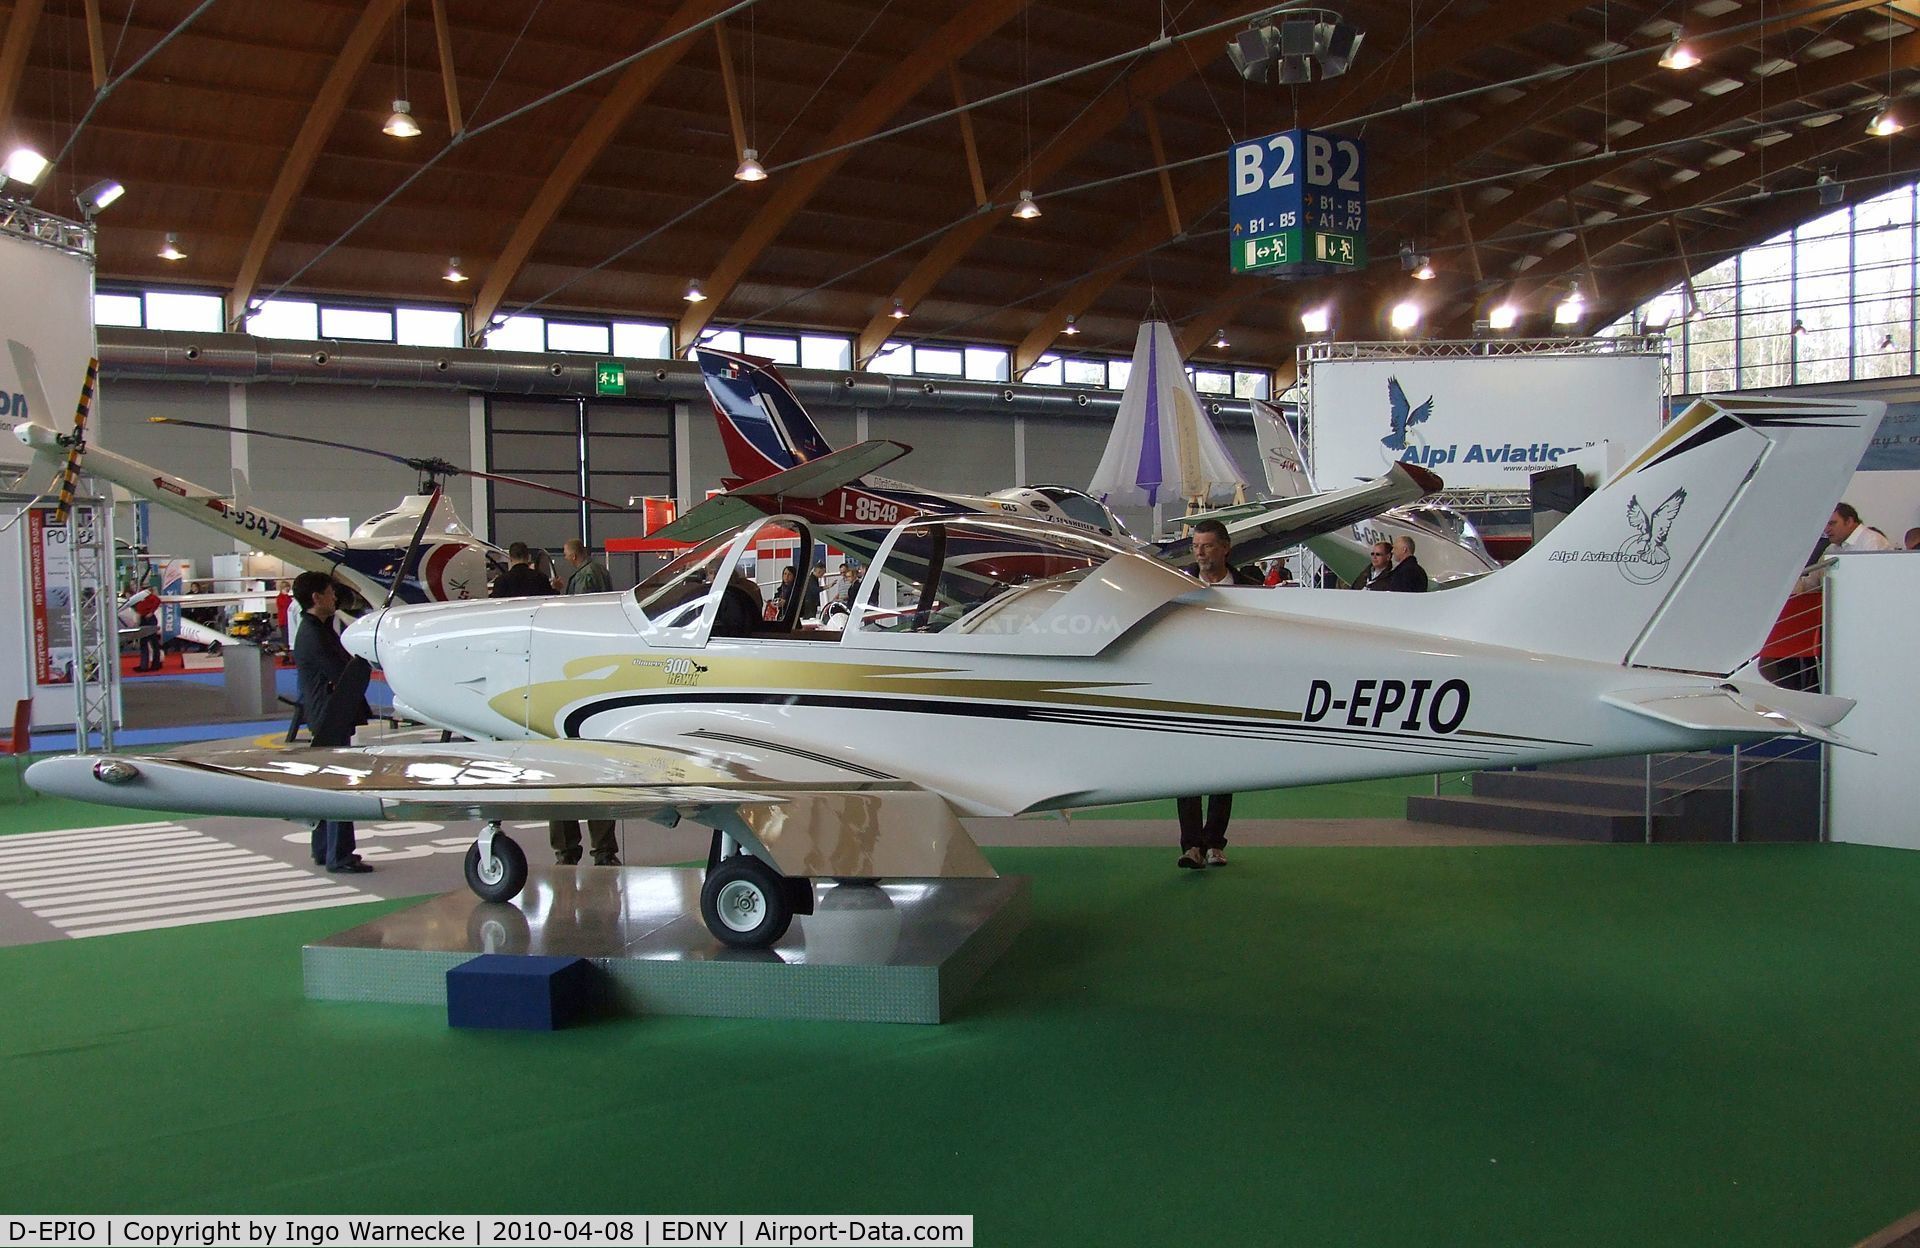 D-EPIO, Alpi Aviation Pioneer 300 Hawk C/N Not found D-EPIO, Alpi Pioneer 300 Hawk at the AERO 2010, Friedrichshafen